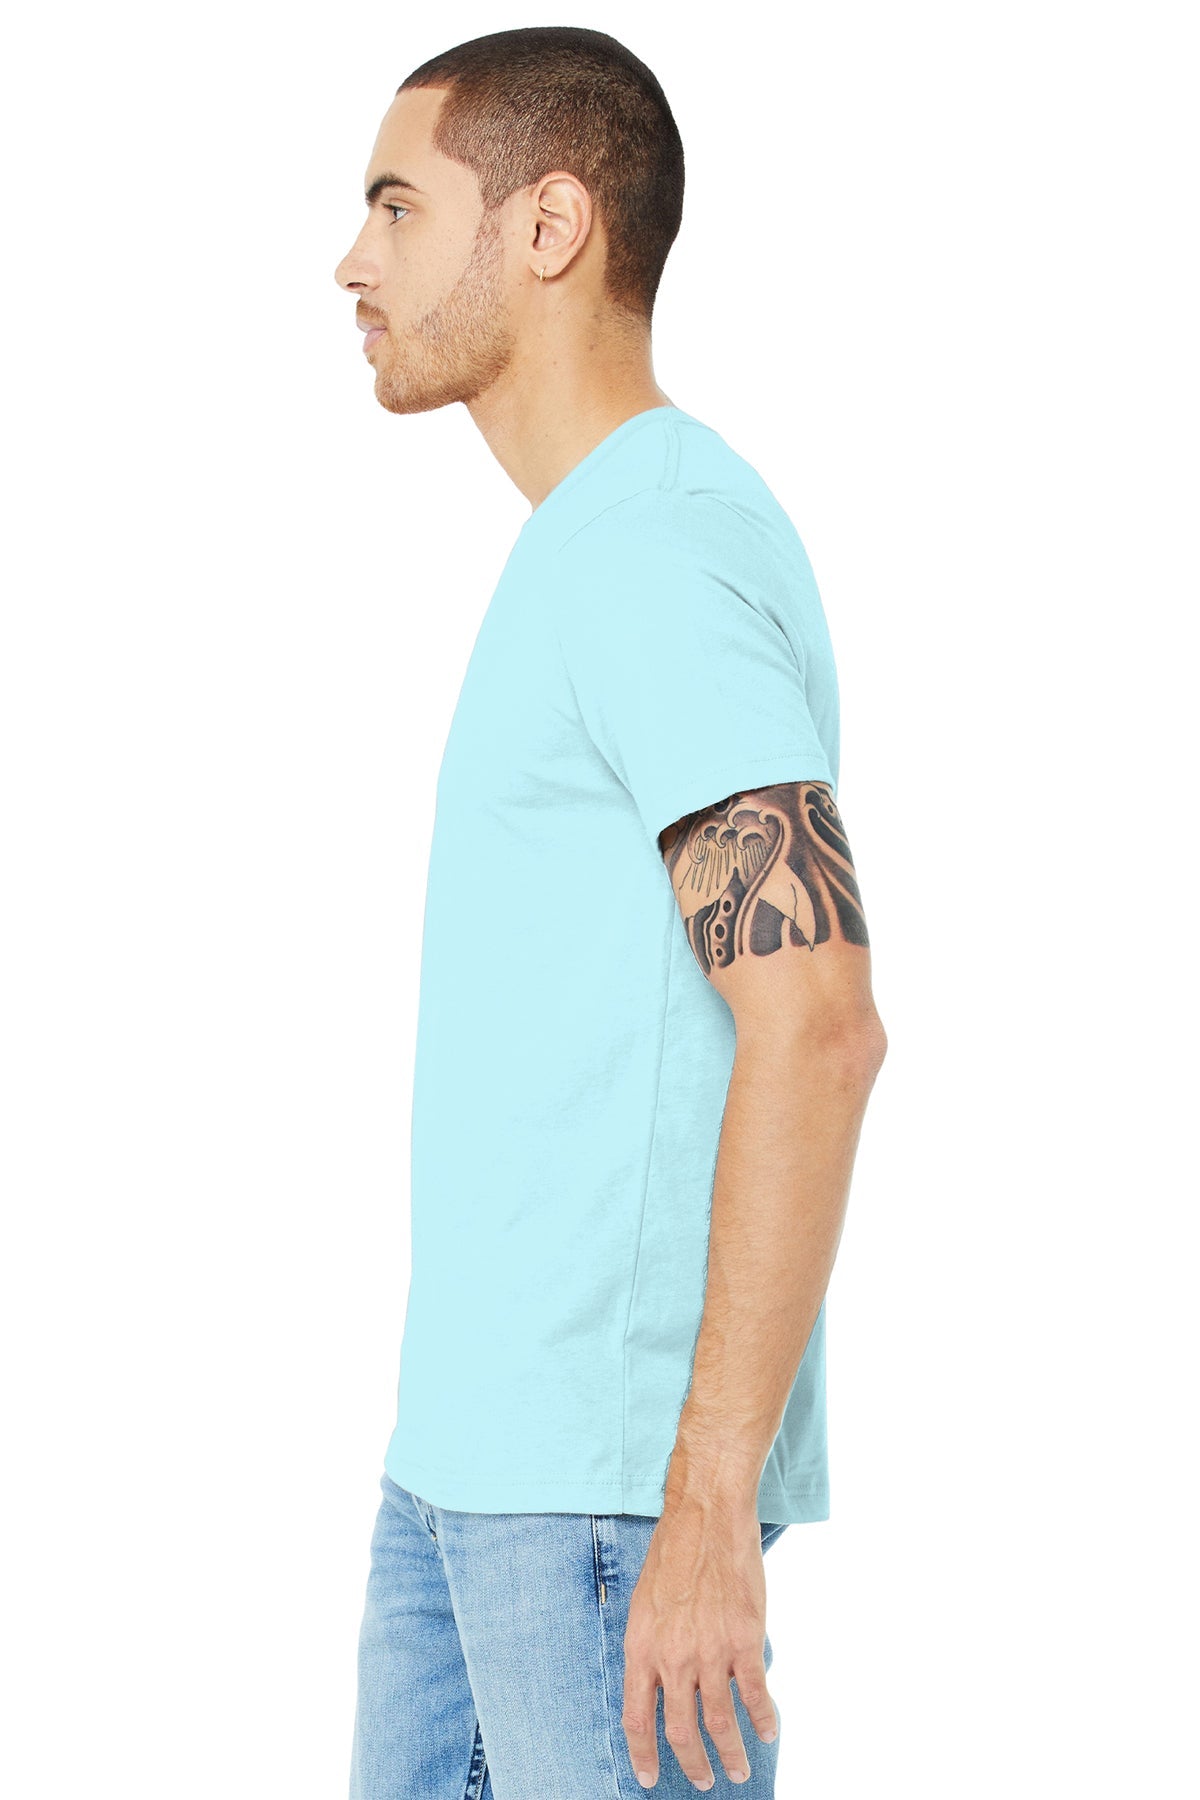 bella + canvas unisex jersey short sleeve t-shirt 3001c heather ice blue